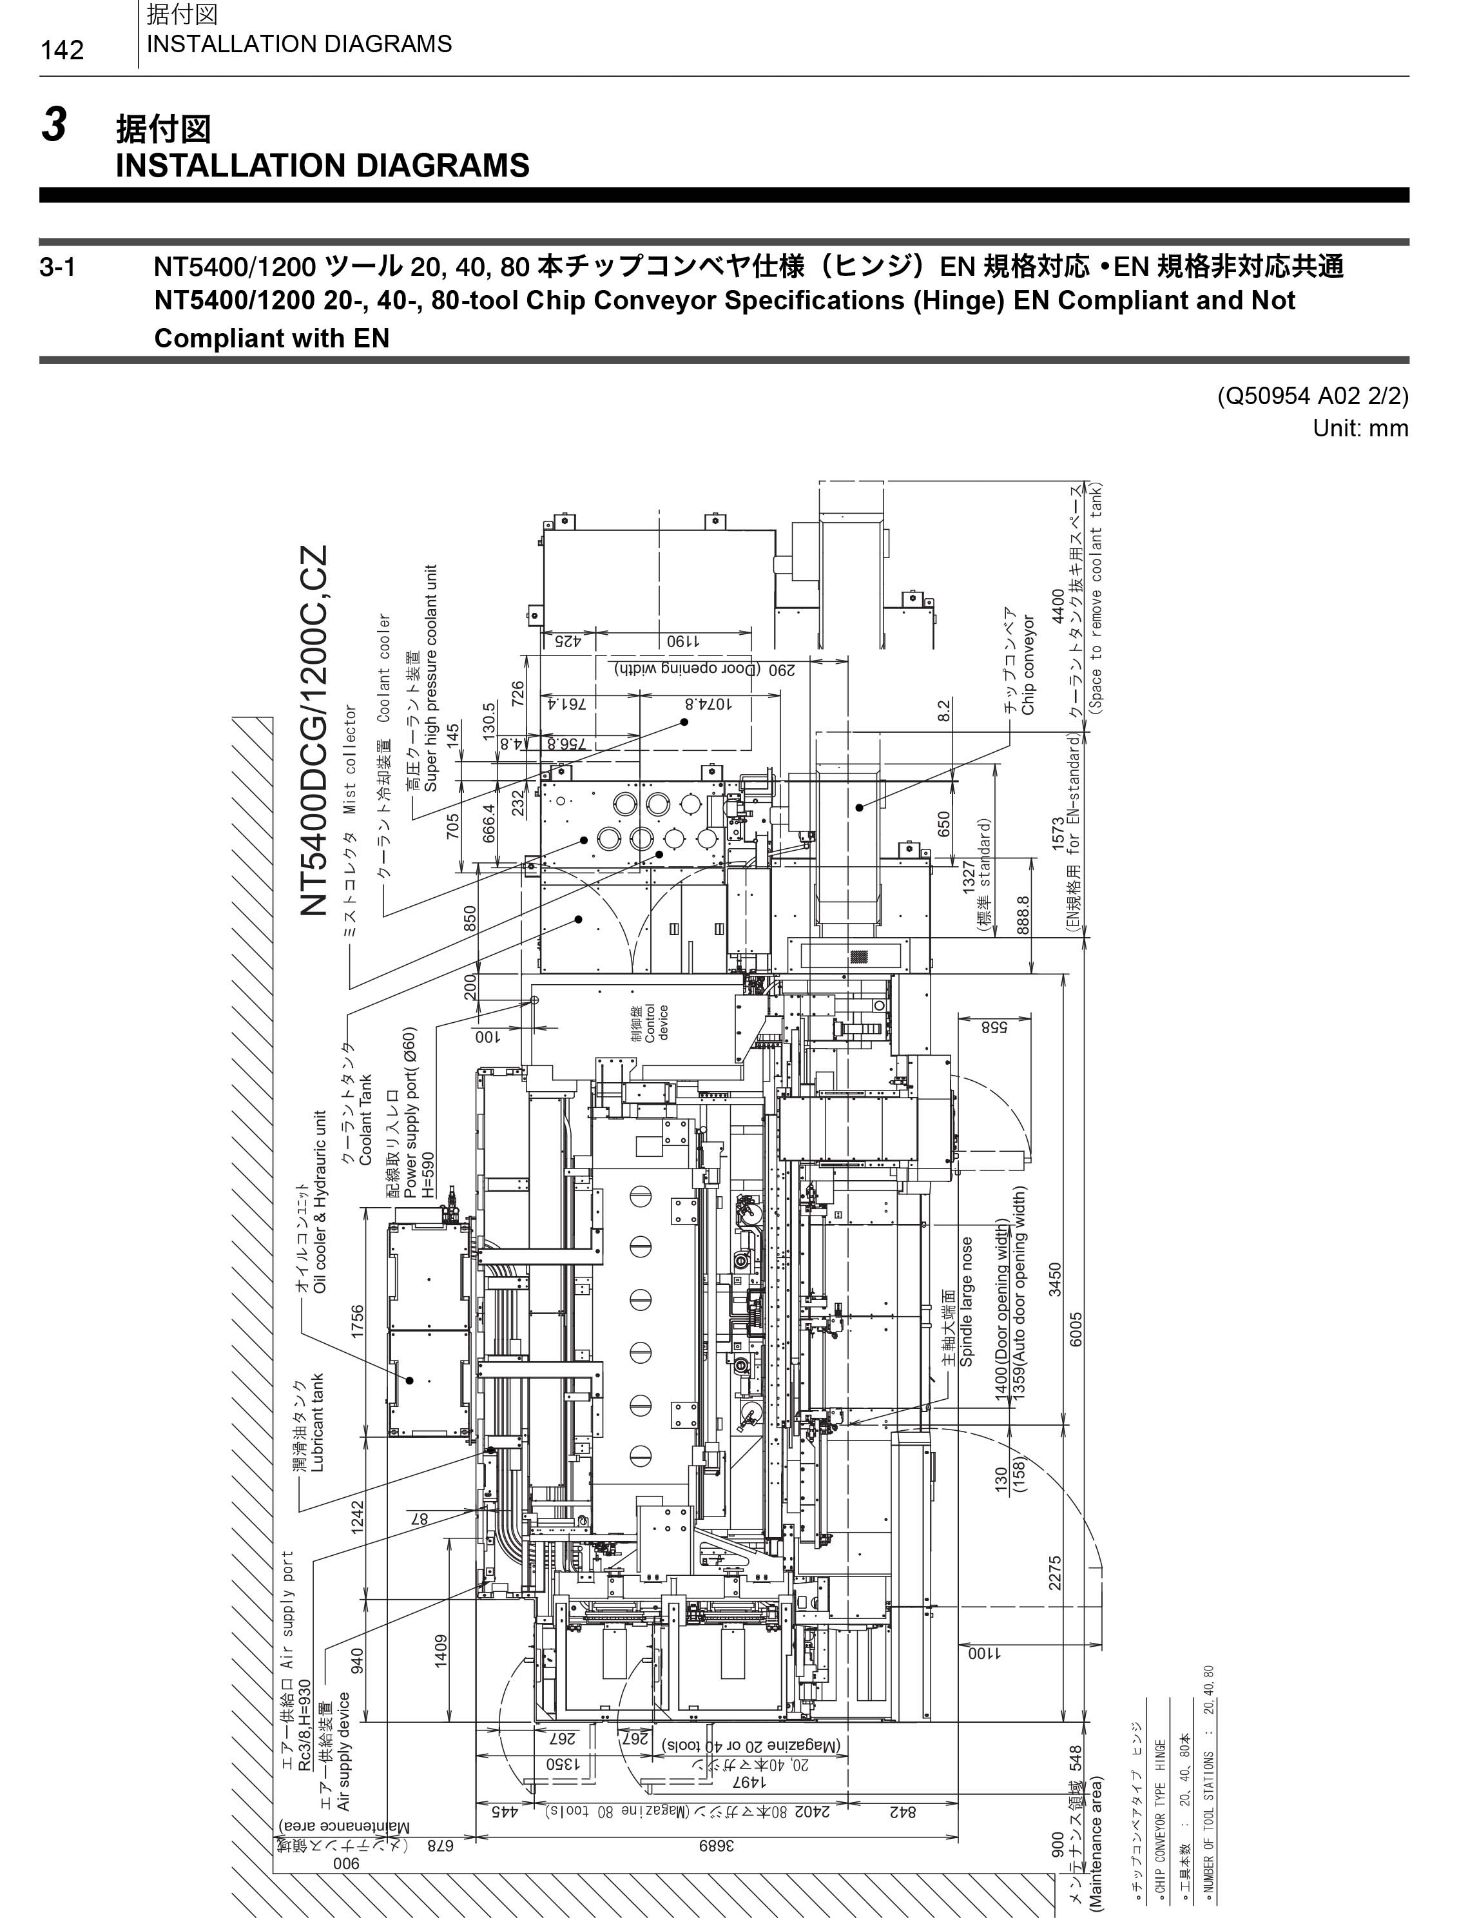 Mori Seiki NT5400 DCG/1800SZ CNC 5-Axis Horizontal Turning Center, MXS-711 III CNC control, 36.2” - Image 22 of 22